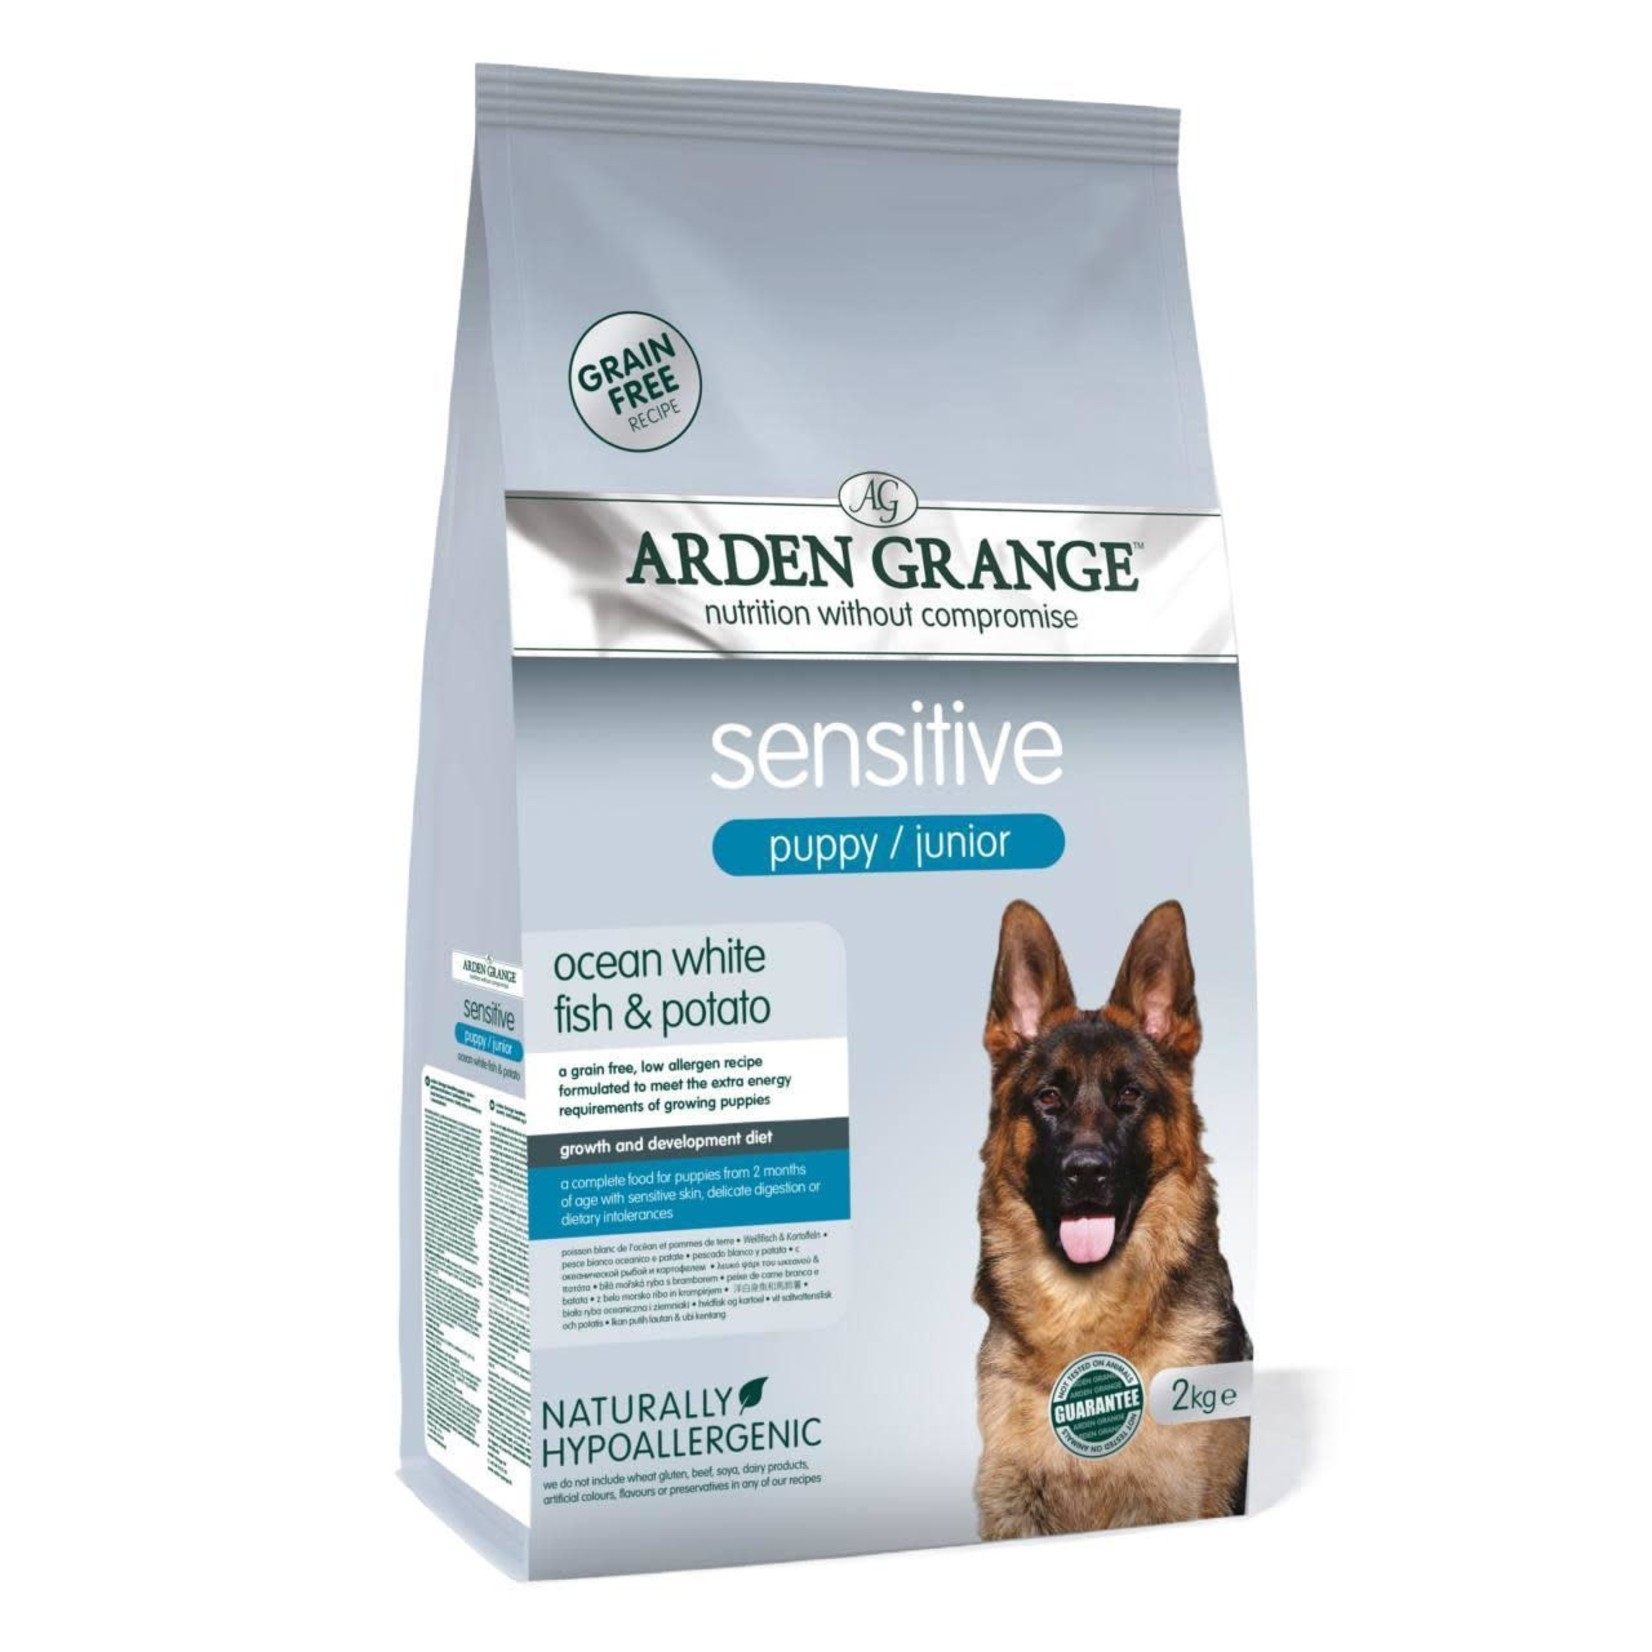 Arden Grange Sensitive Puppy & Junior Dry Dog Food, Ocean White Fish & Potato Dog